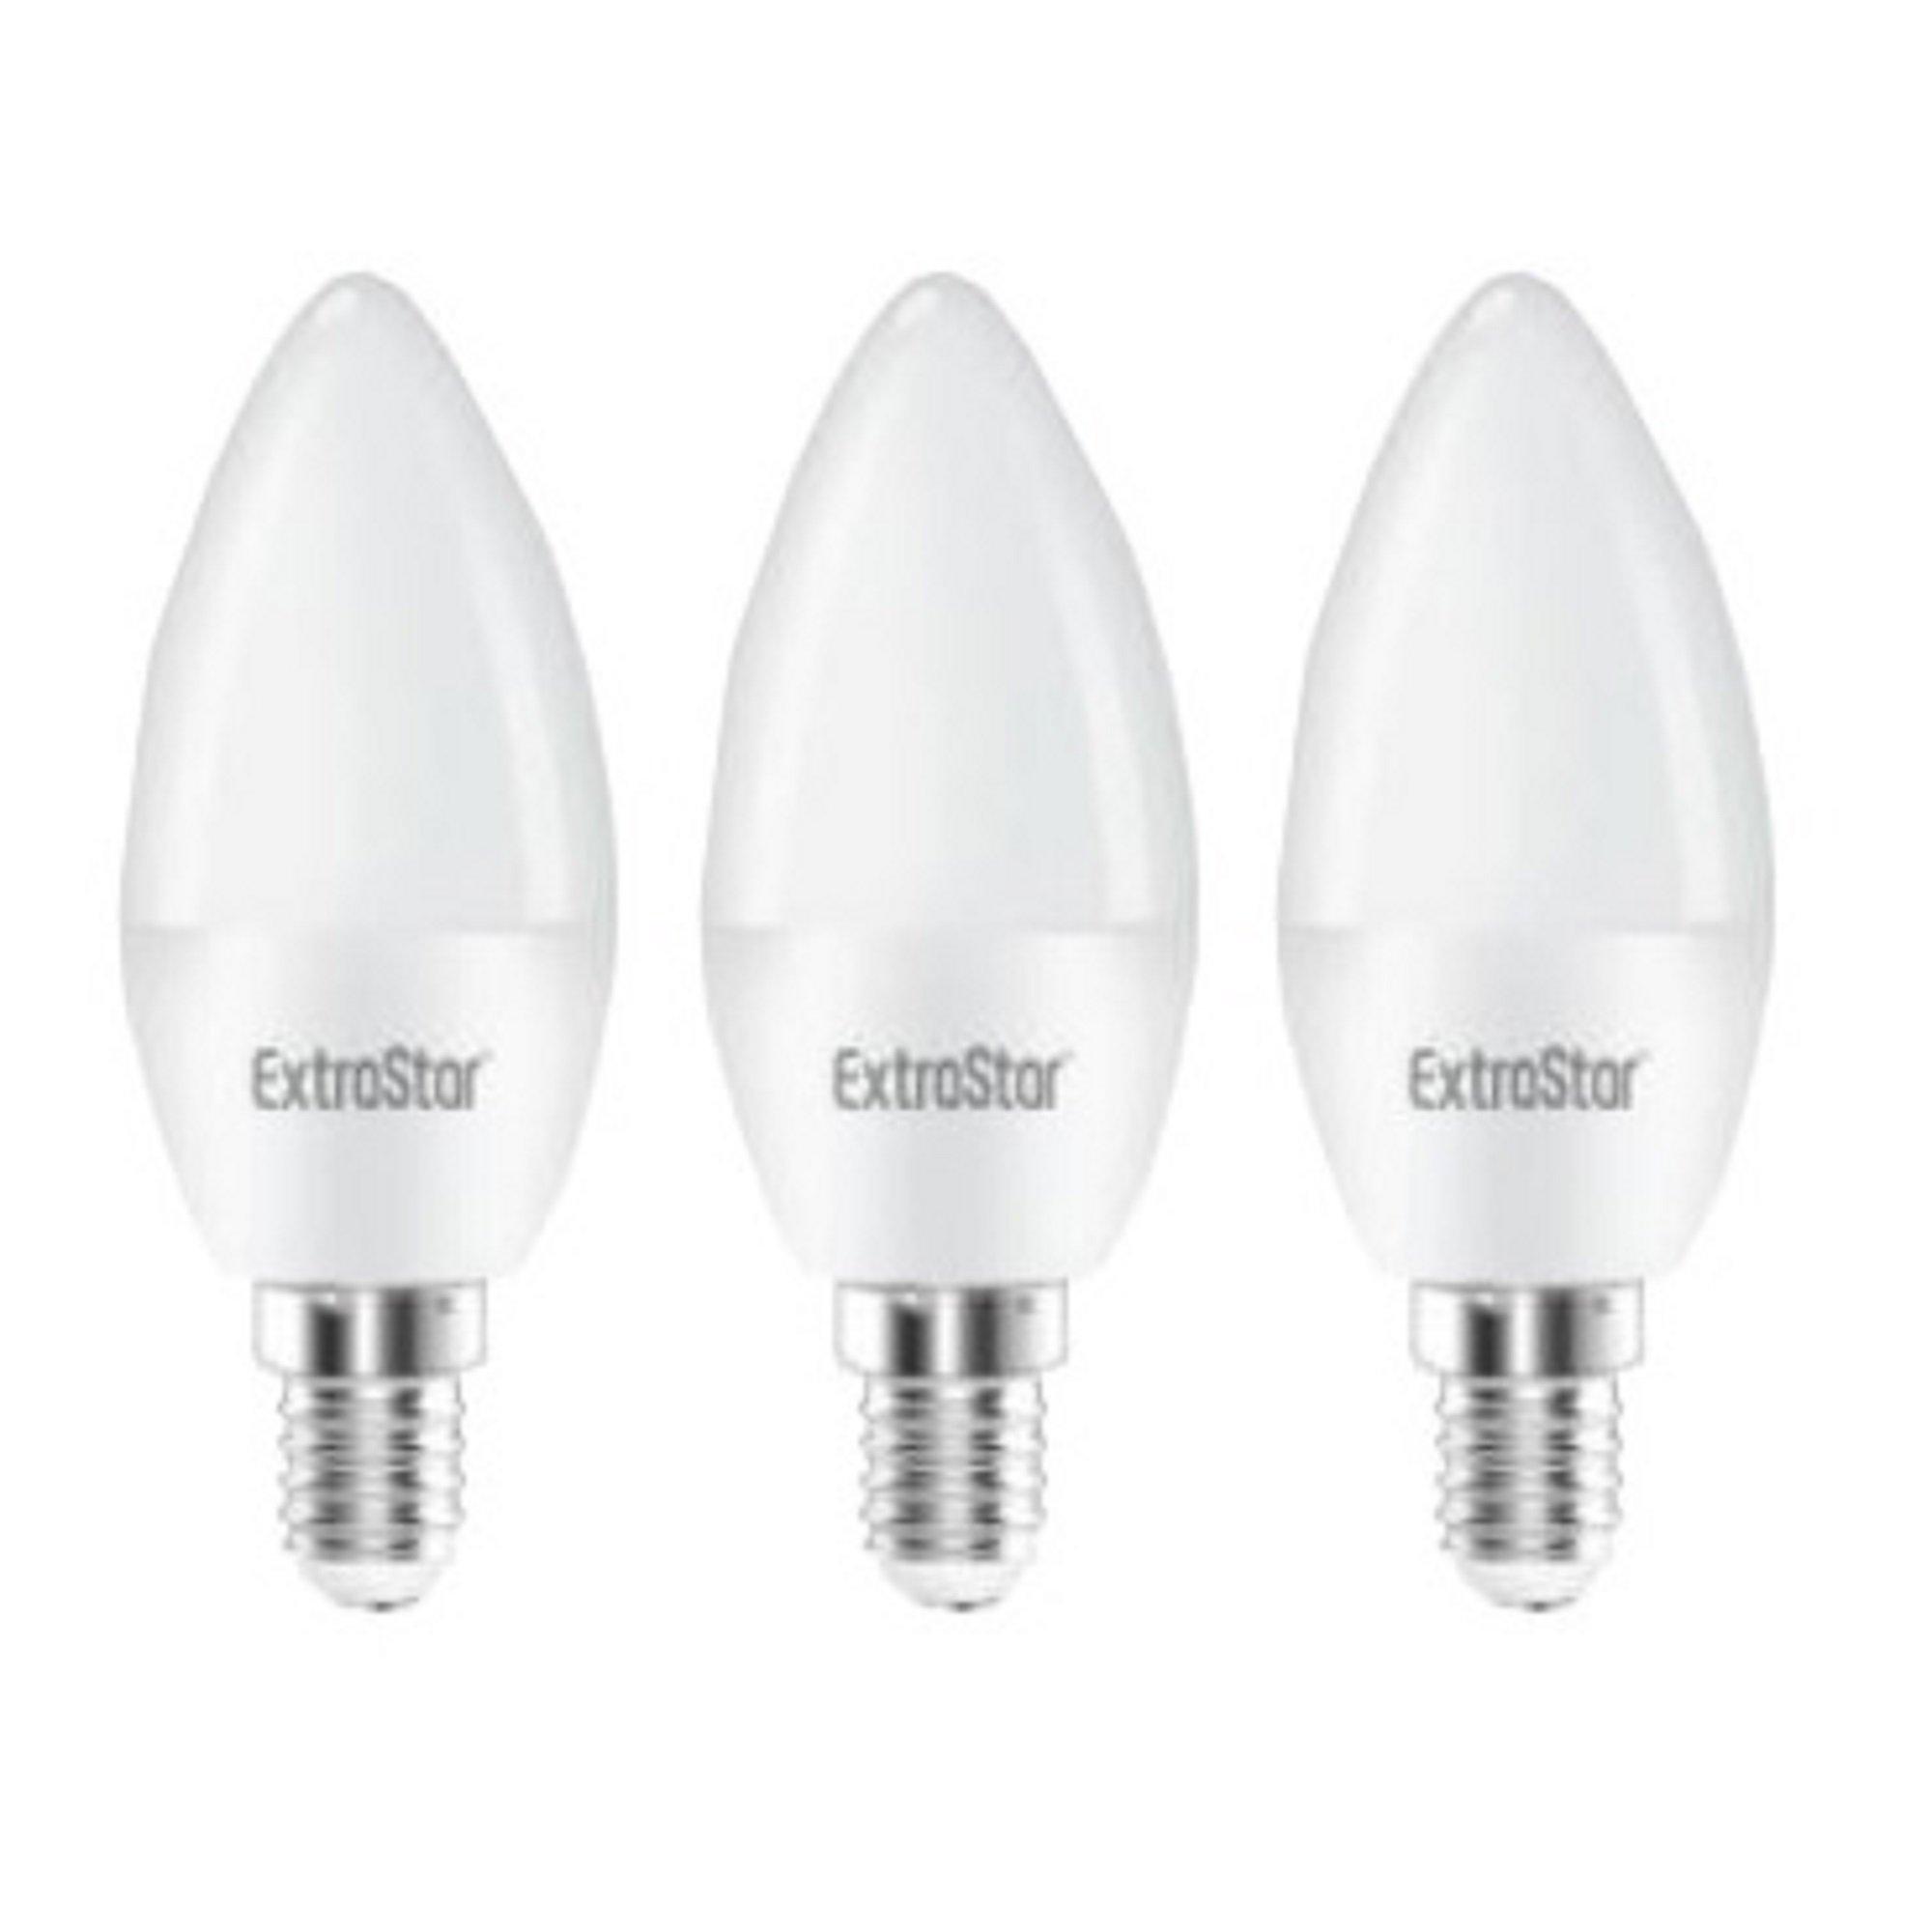 6W LED Candle Bulb E14, Daylight 6500K (pack of 3)